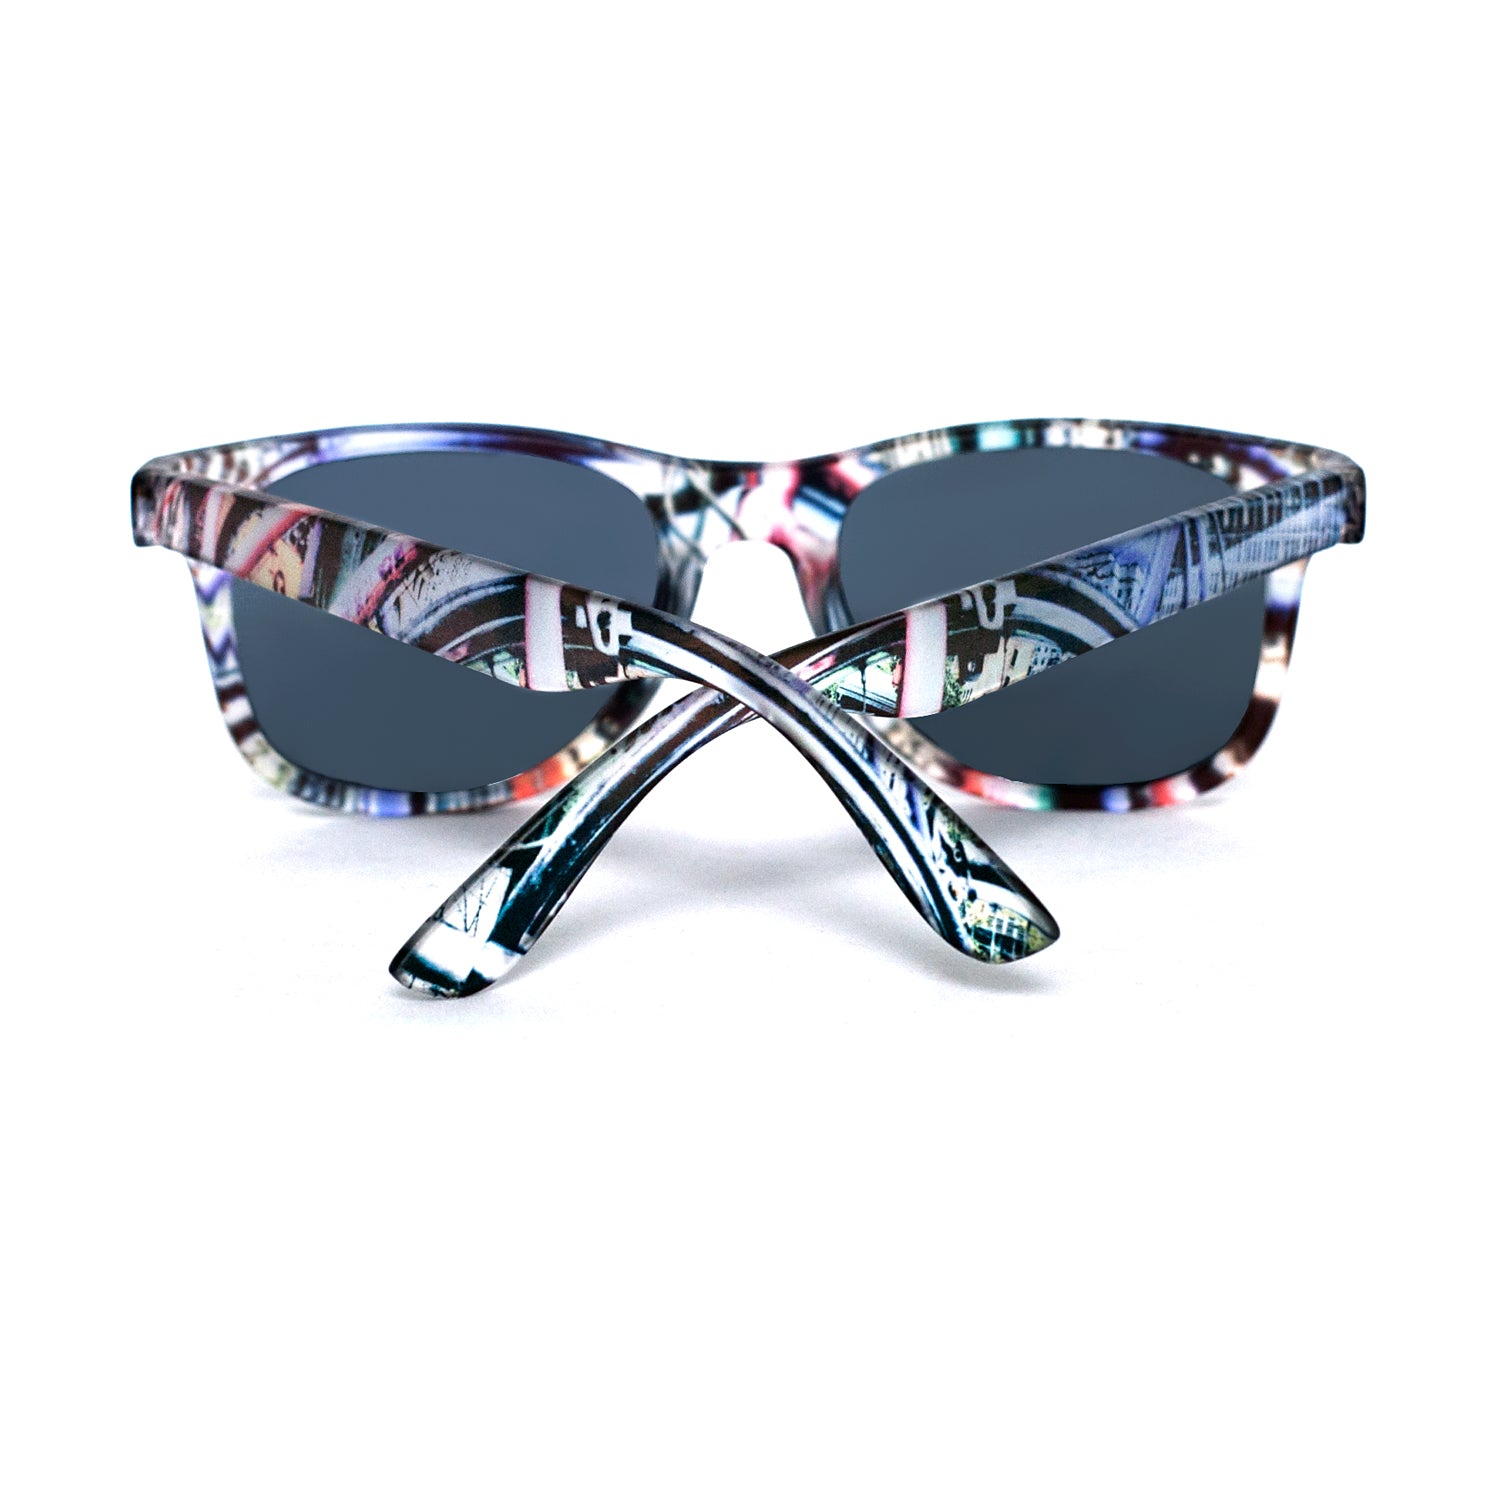 Rise Art Design MLP Astor Bicycle Sunglasses